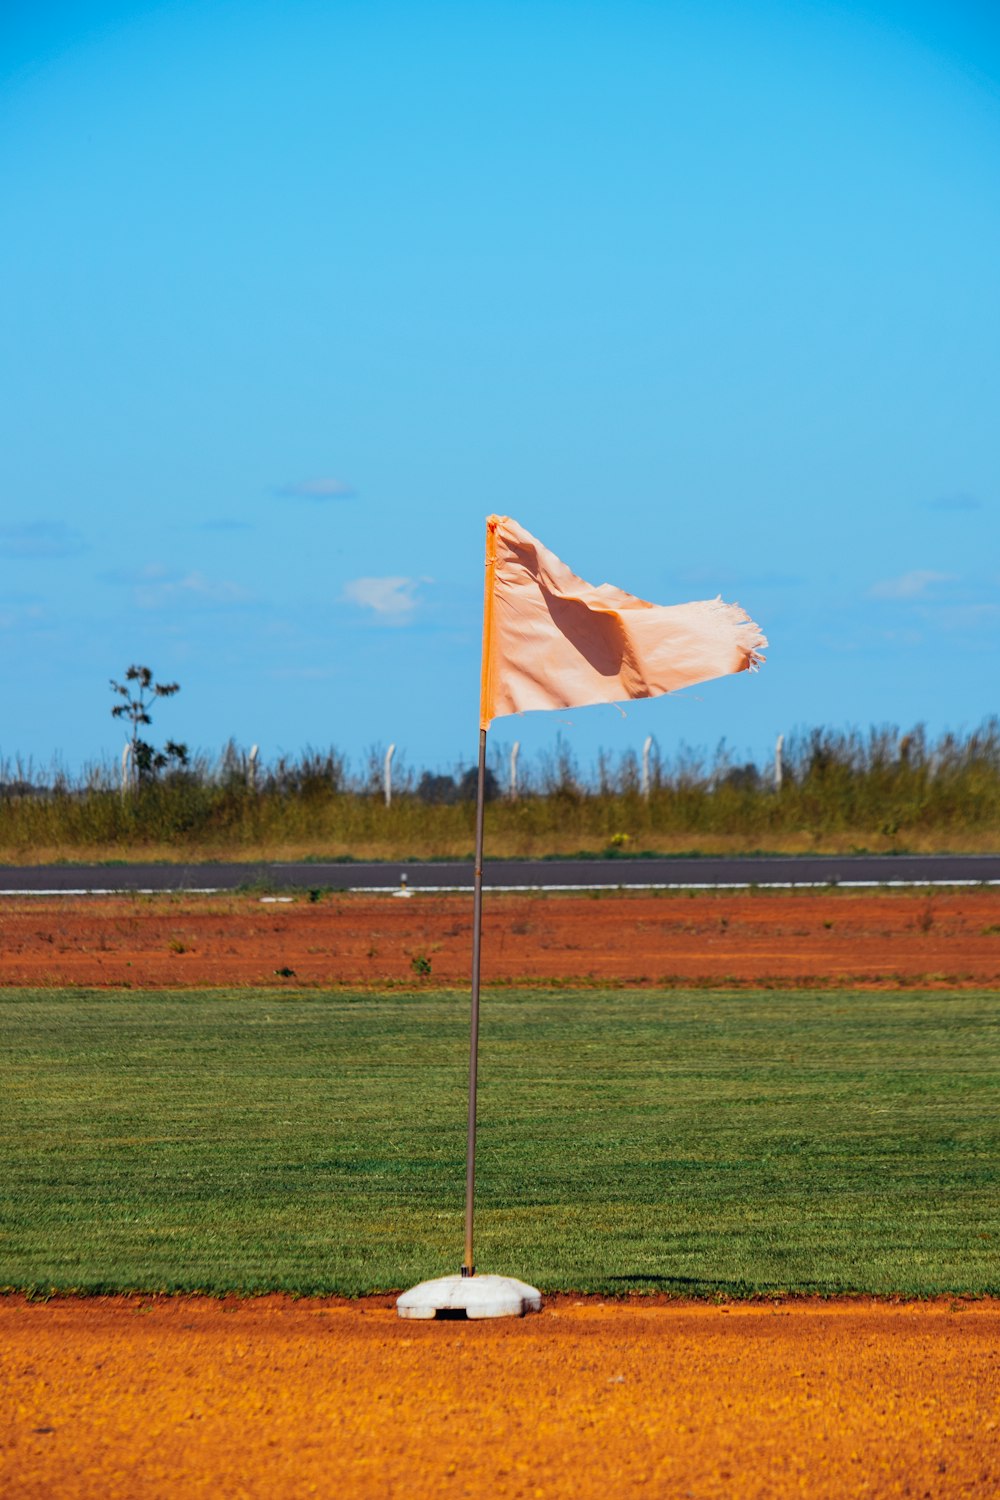 a flag on a baseball field with a dirt base